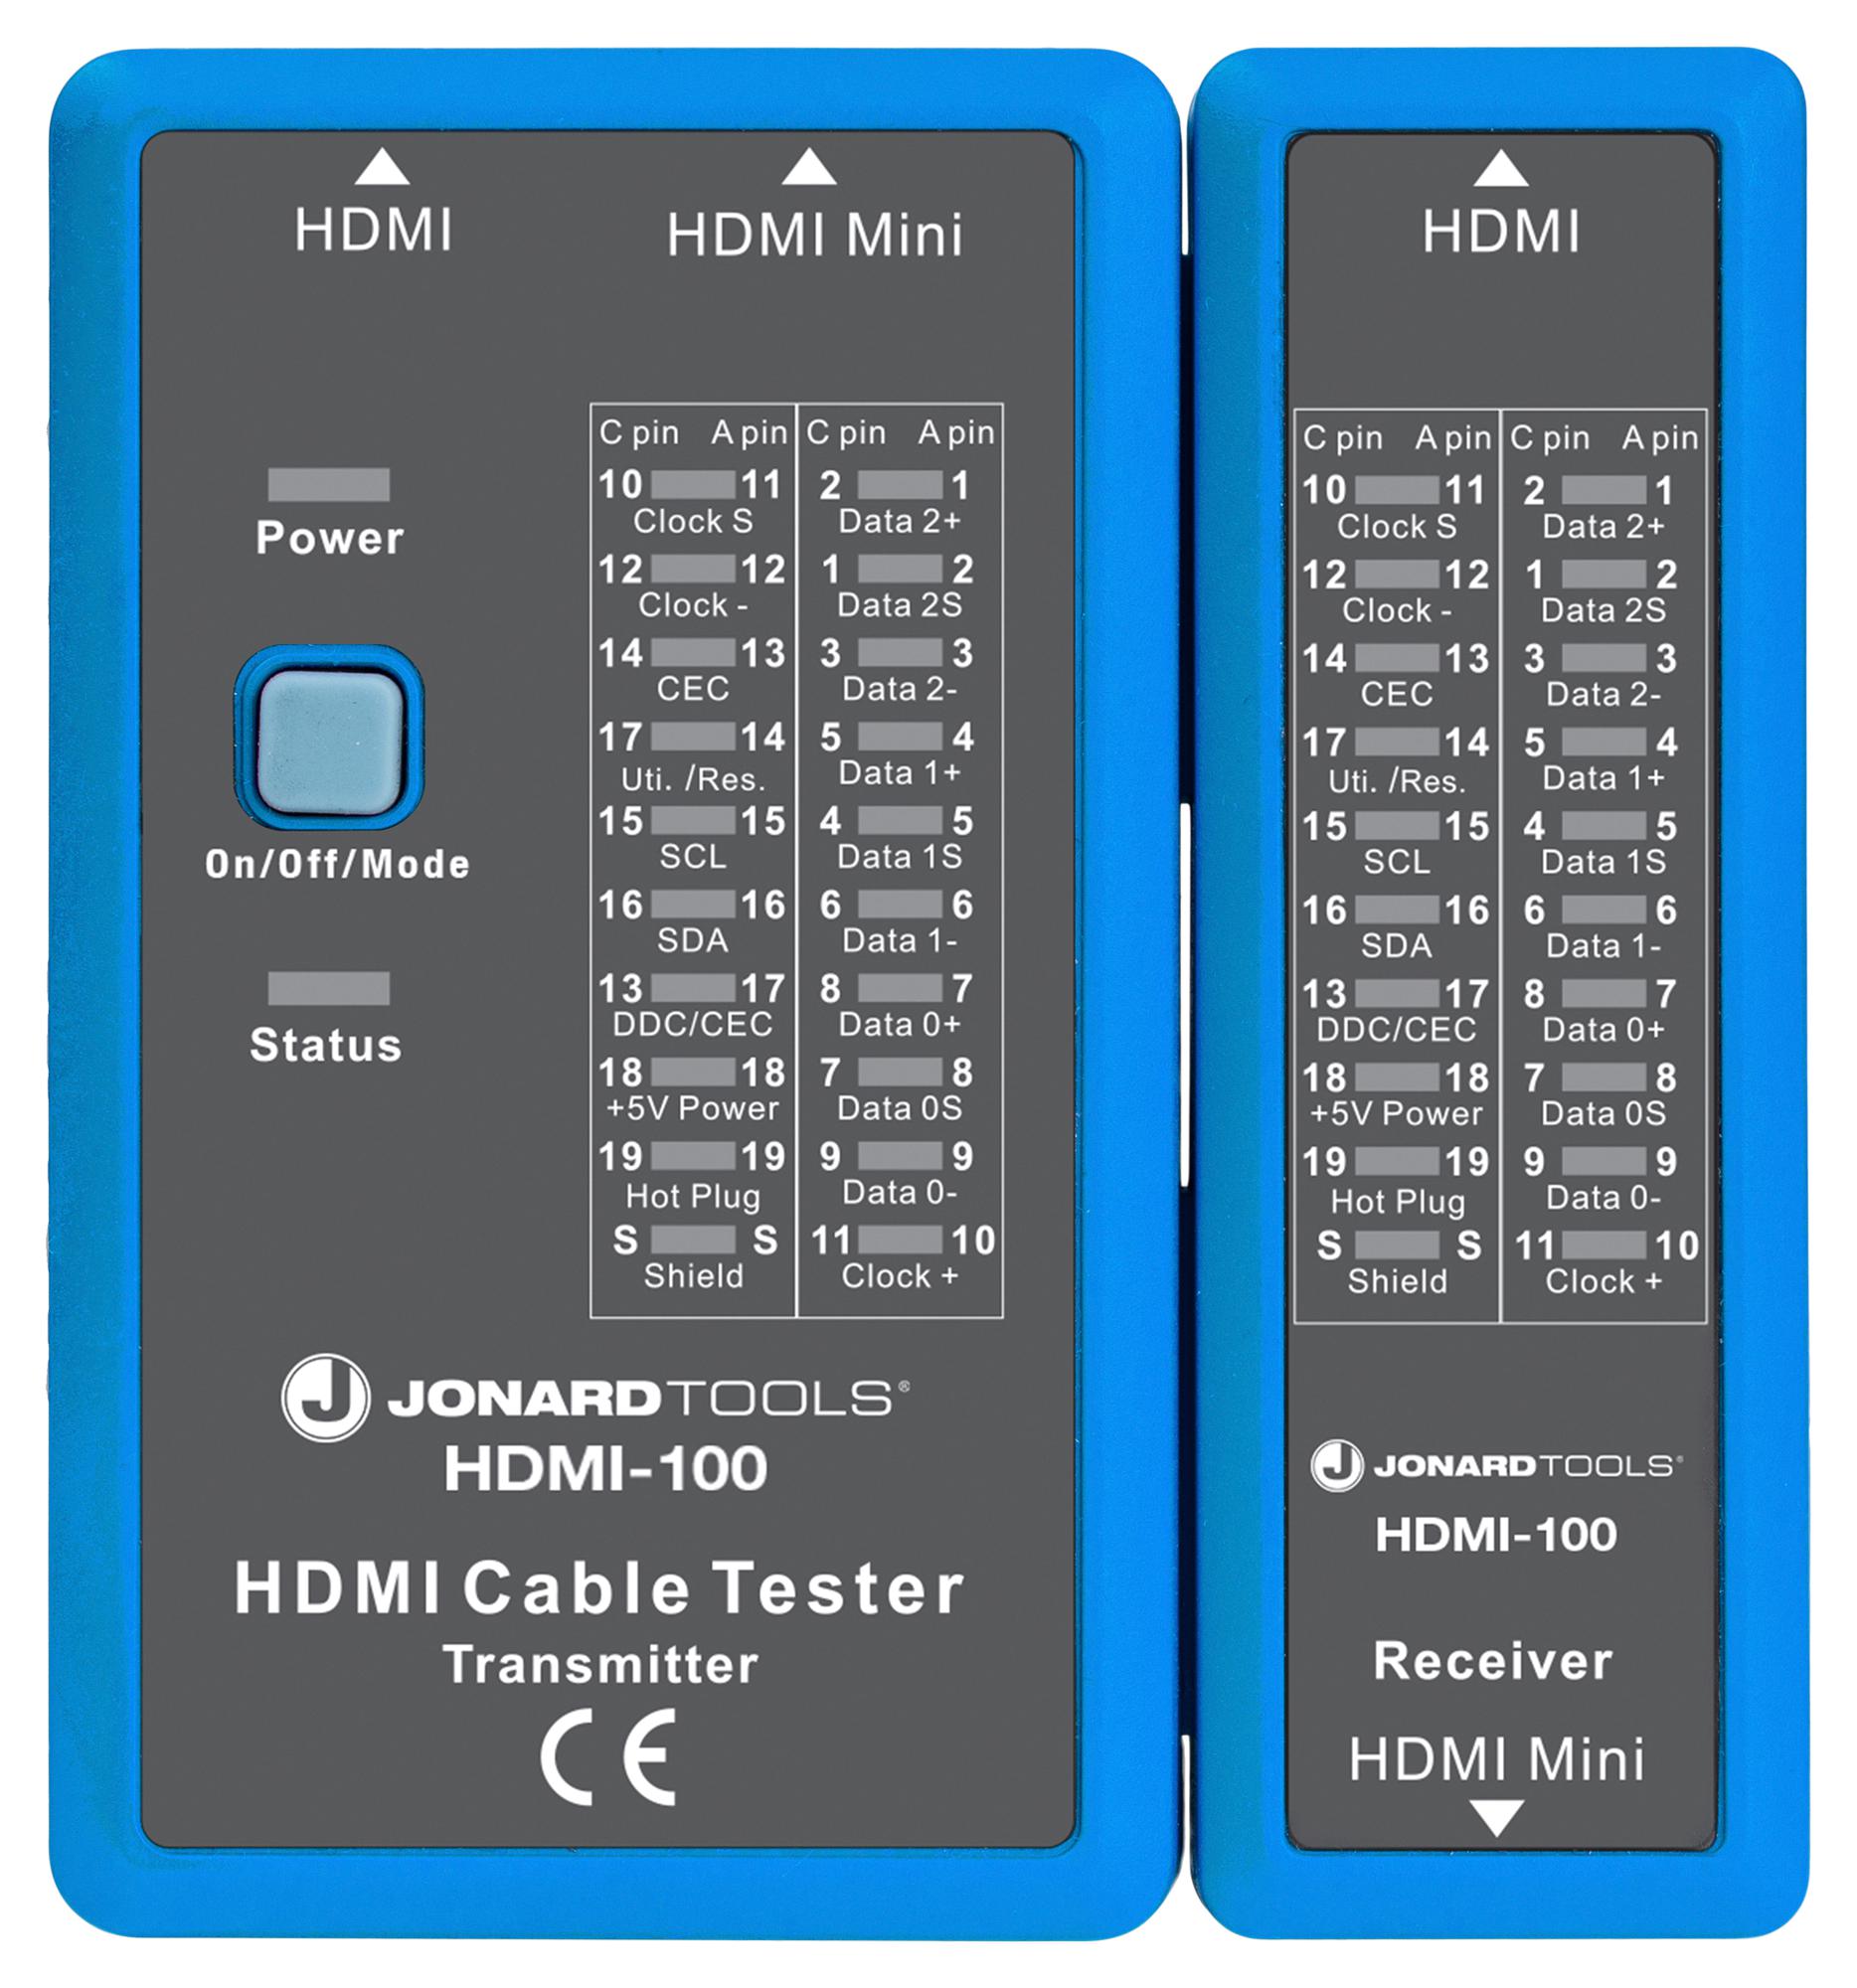 img HDMI100_JONARD-TOOLS.jpg